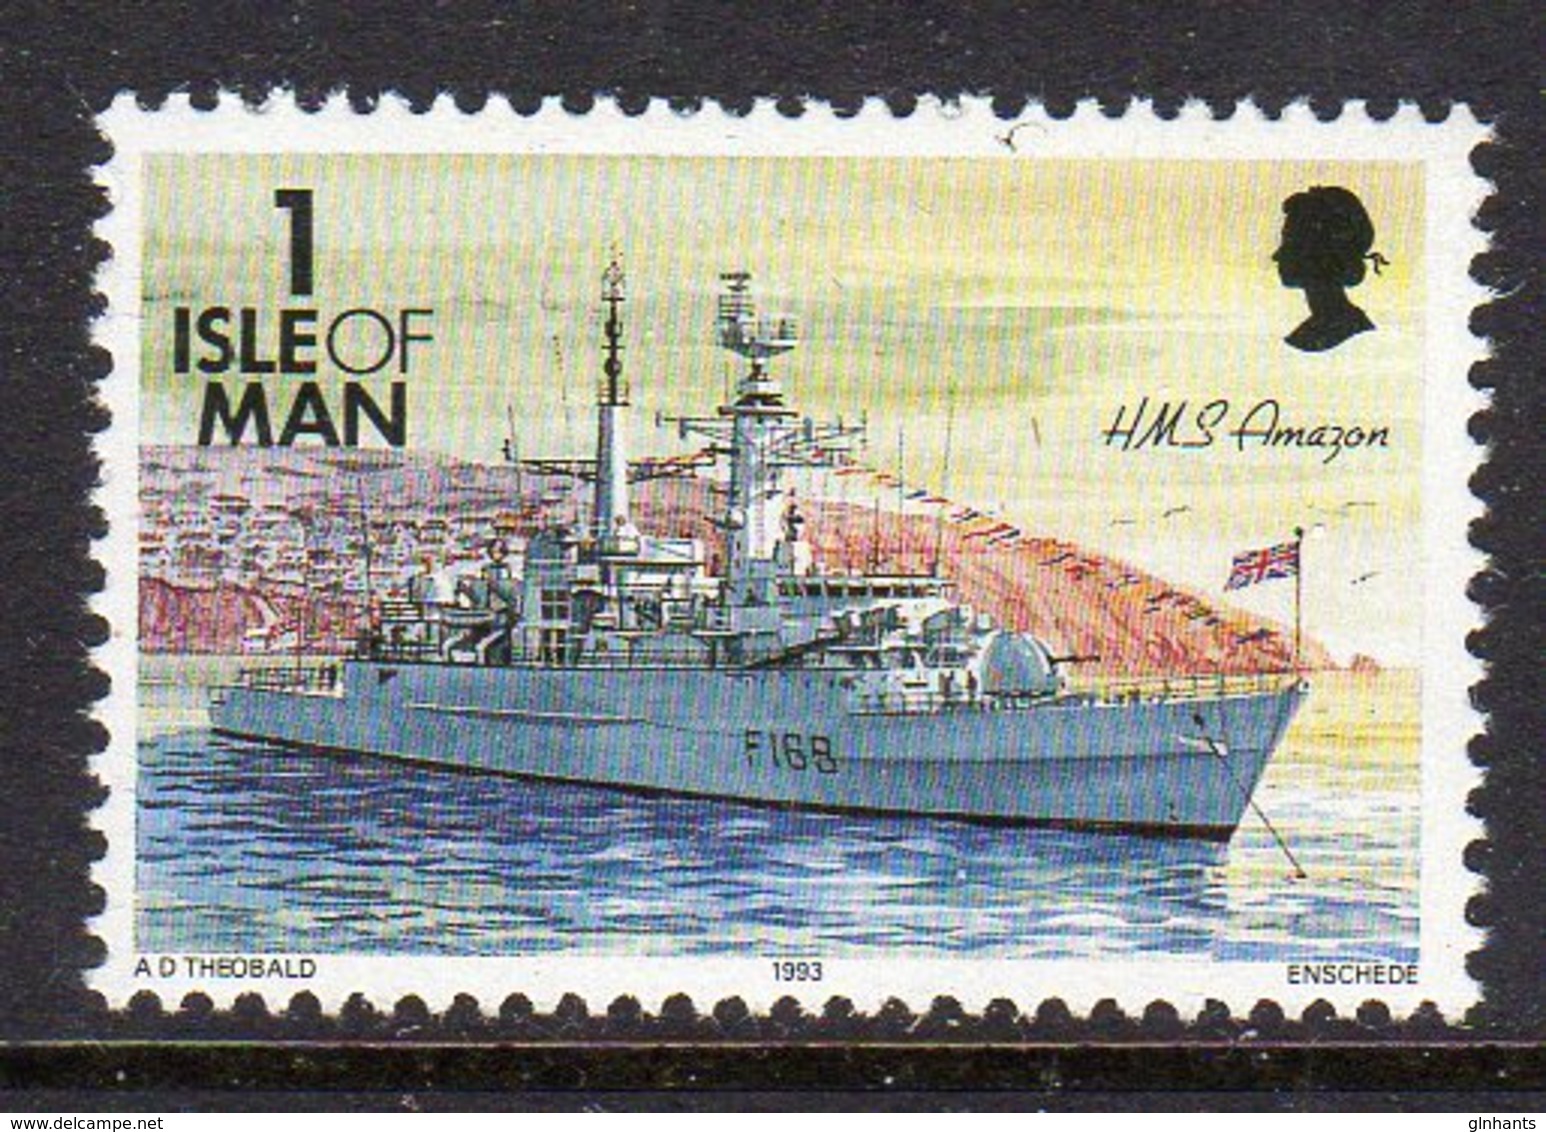 GB ISLE OF MAN IOM - 1993 DEFINITIVE SHIPS 1p STAMP FINE MNH ** SG 539 - Isle Of Man